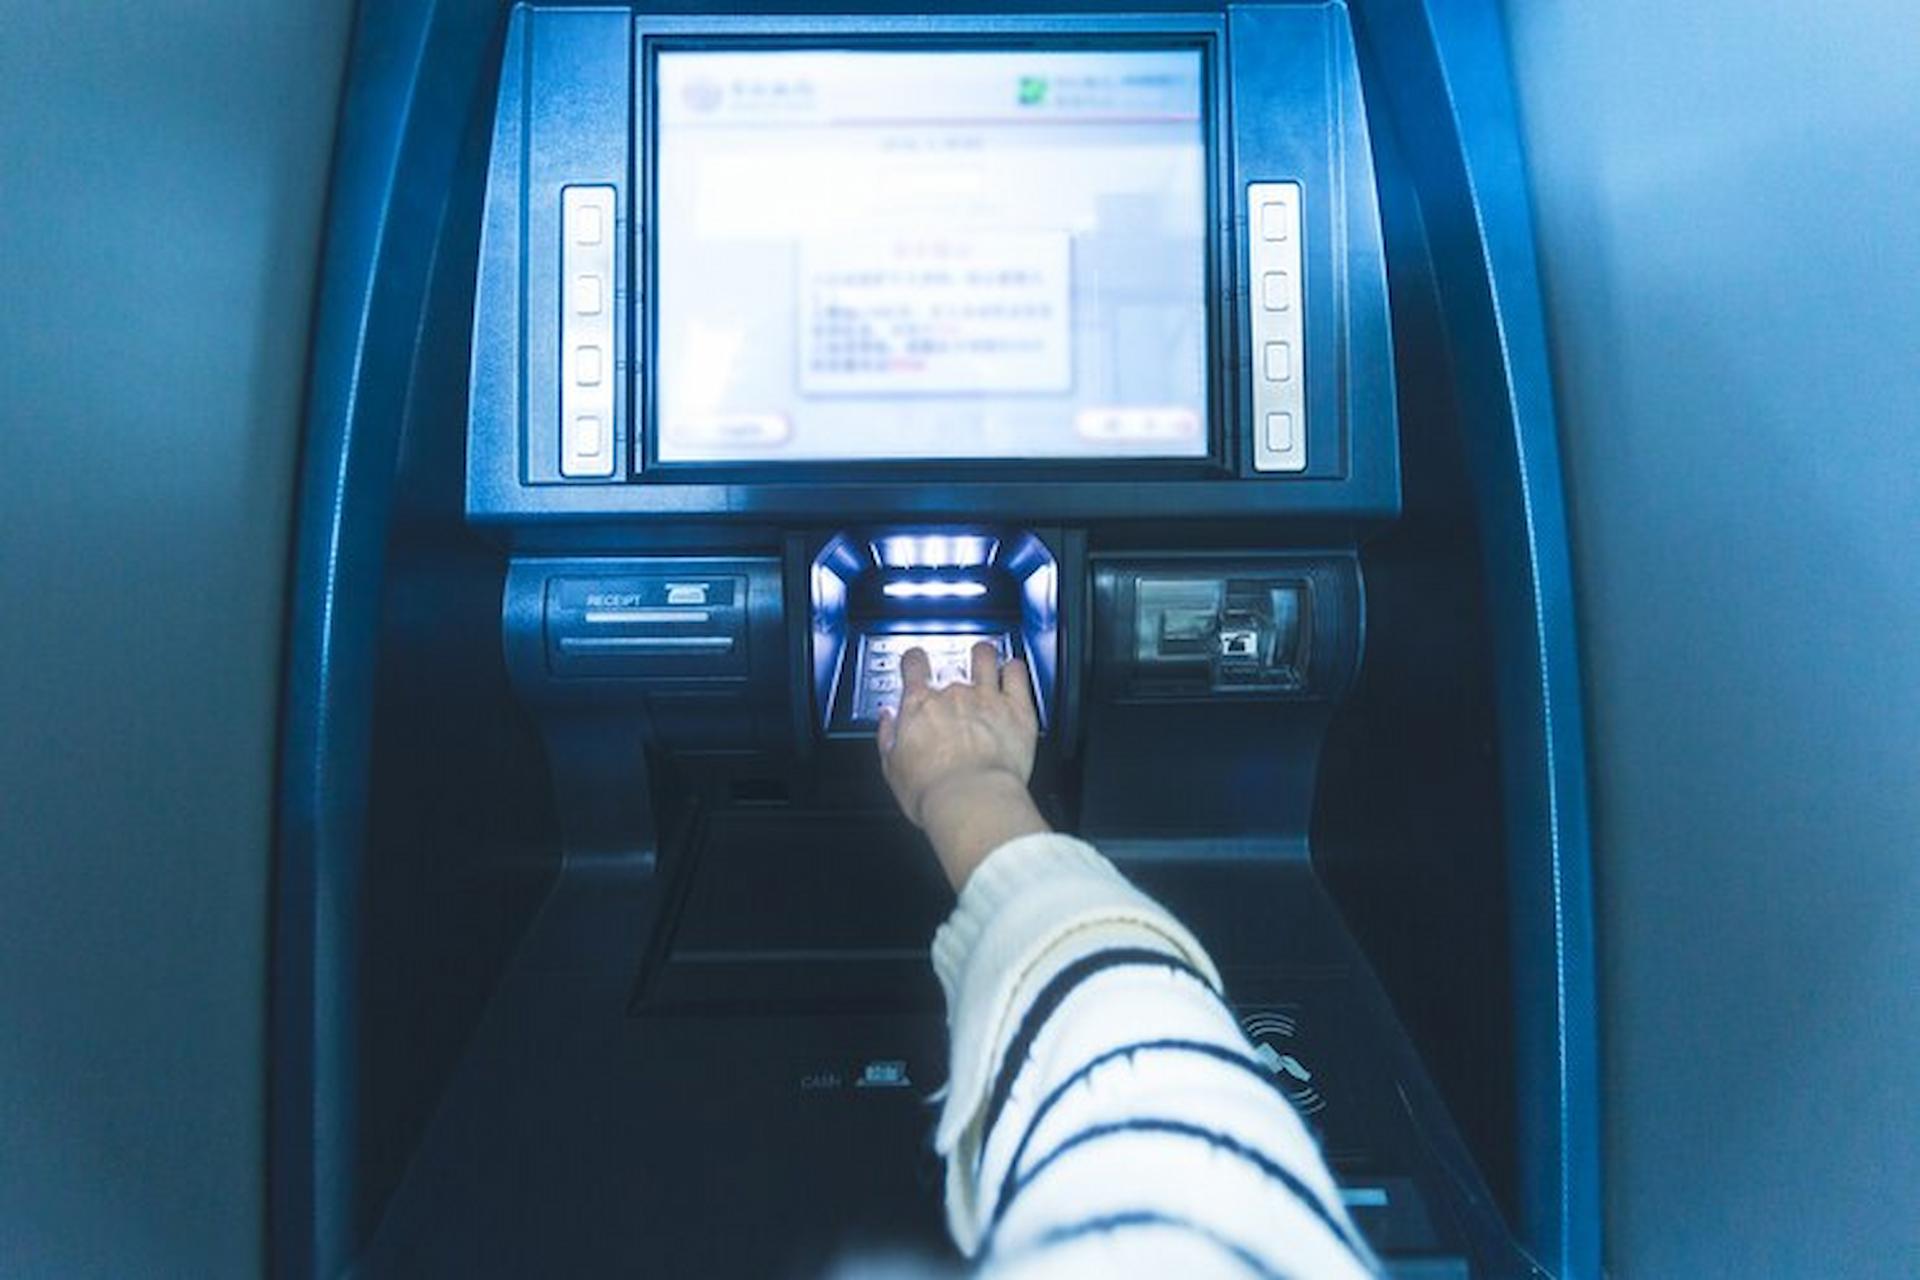 ATM provider